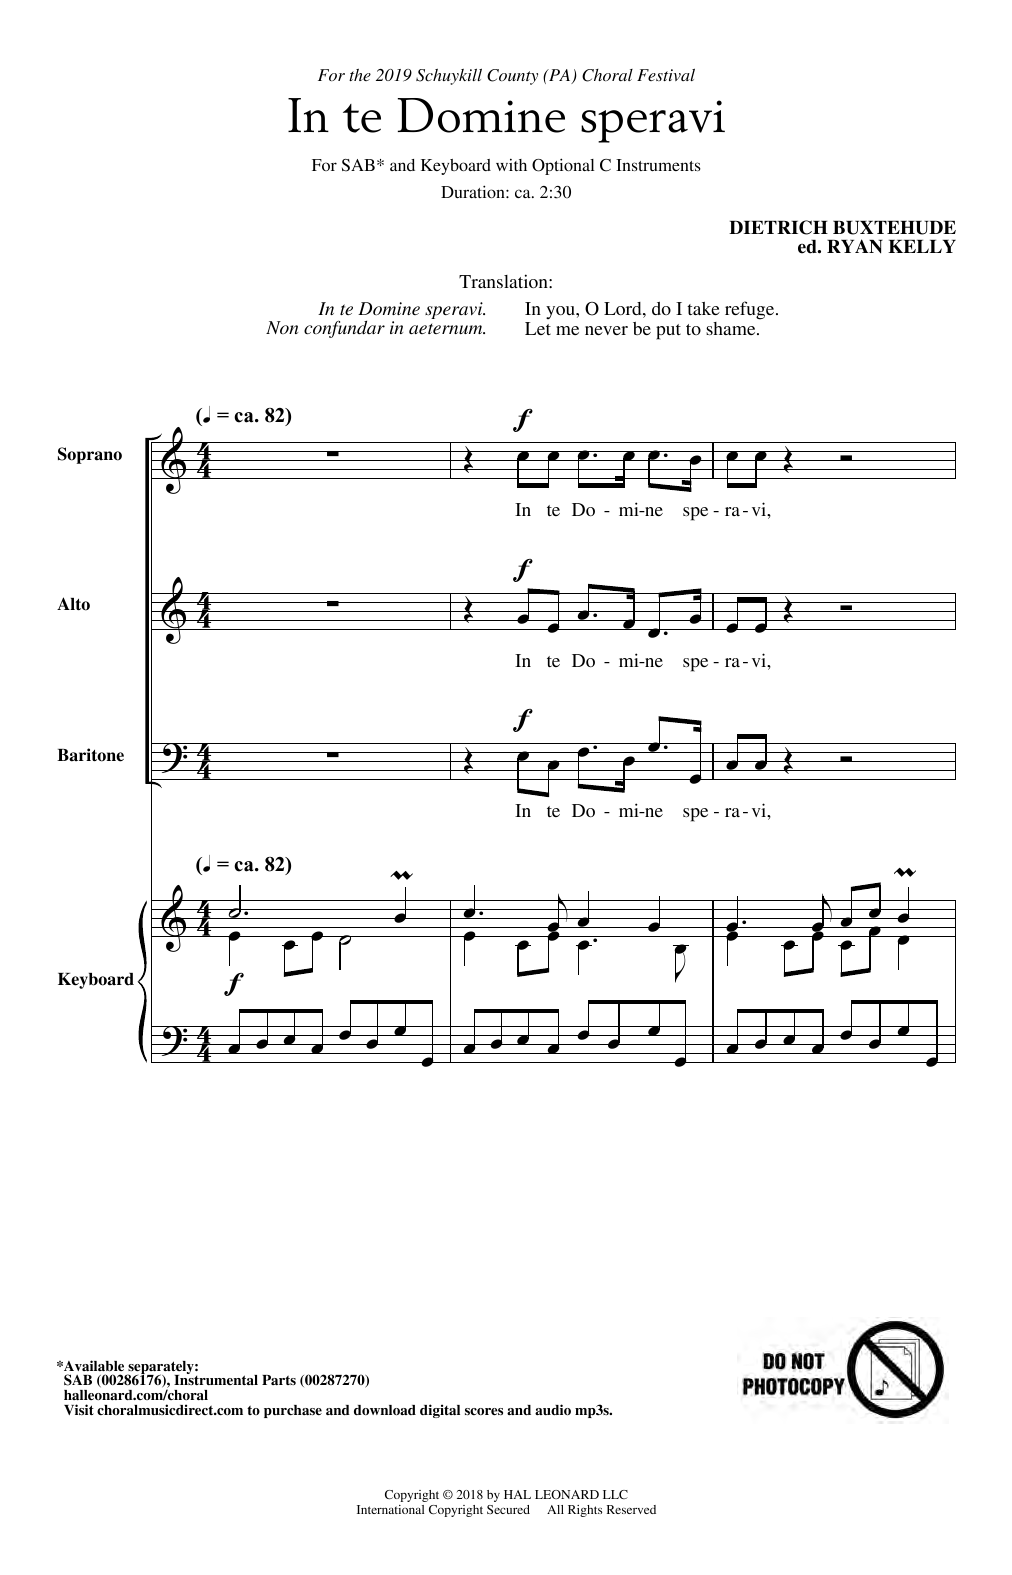 Dietrich Buxtehude In Te Domine Speravi (ed. Ryan Kelly) Sheet Music Notes & Chords for SAB Choir - Download or Print PDF